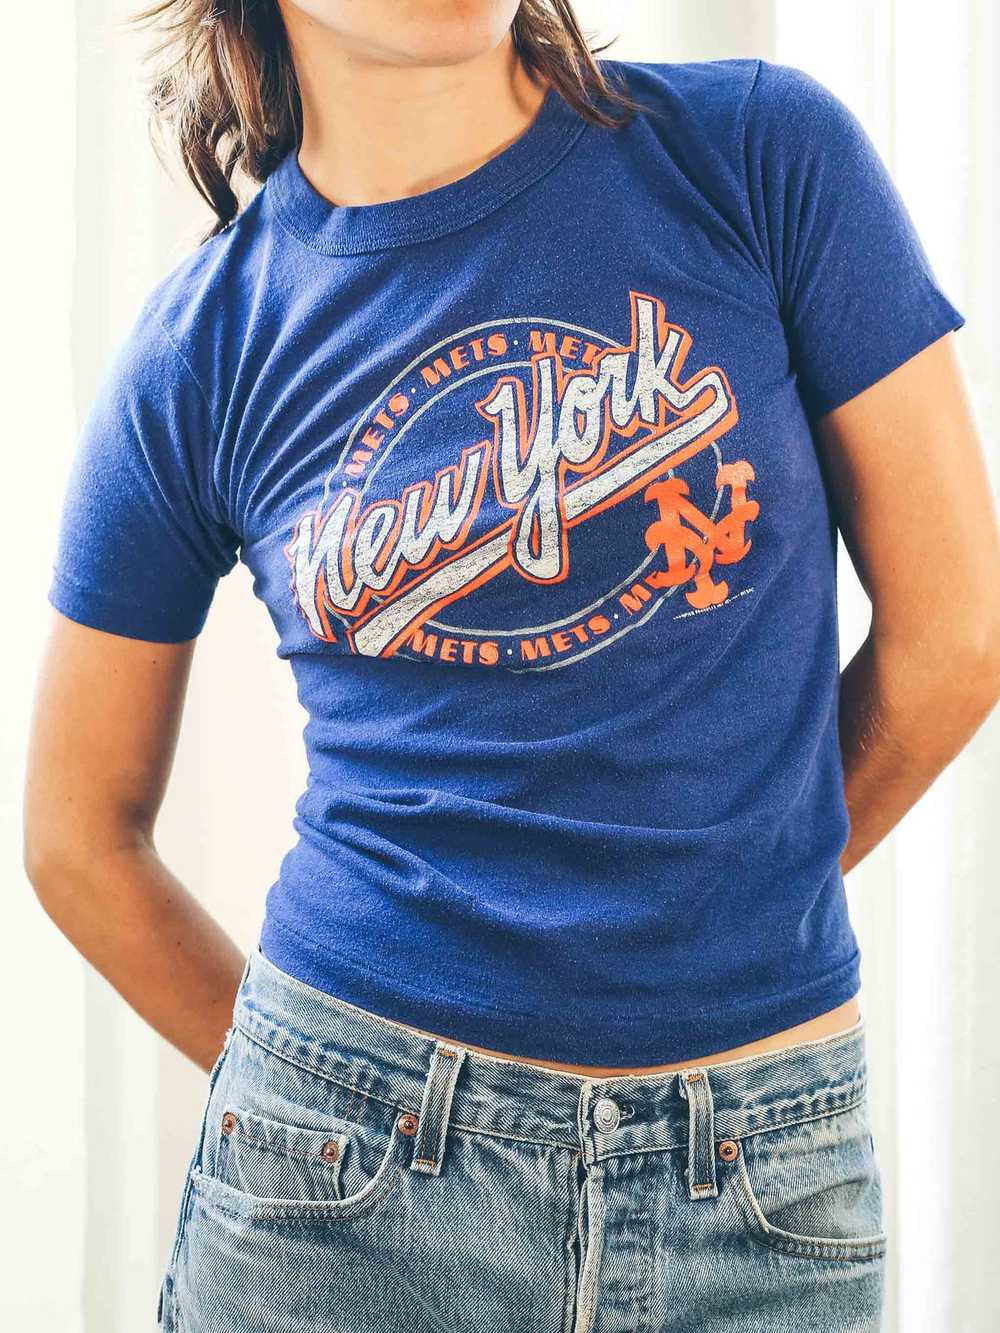 New York Mets Tee - image 1